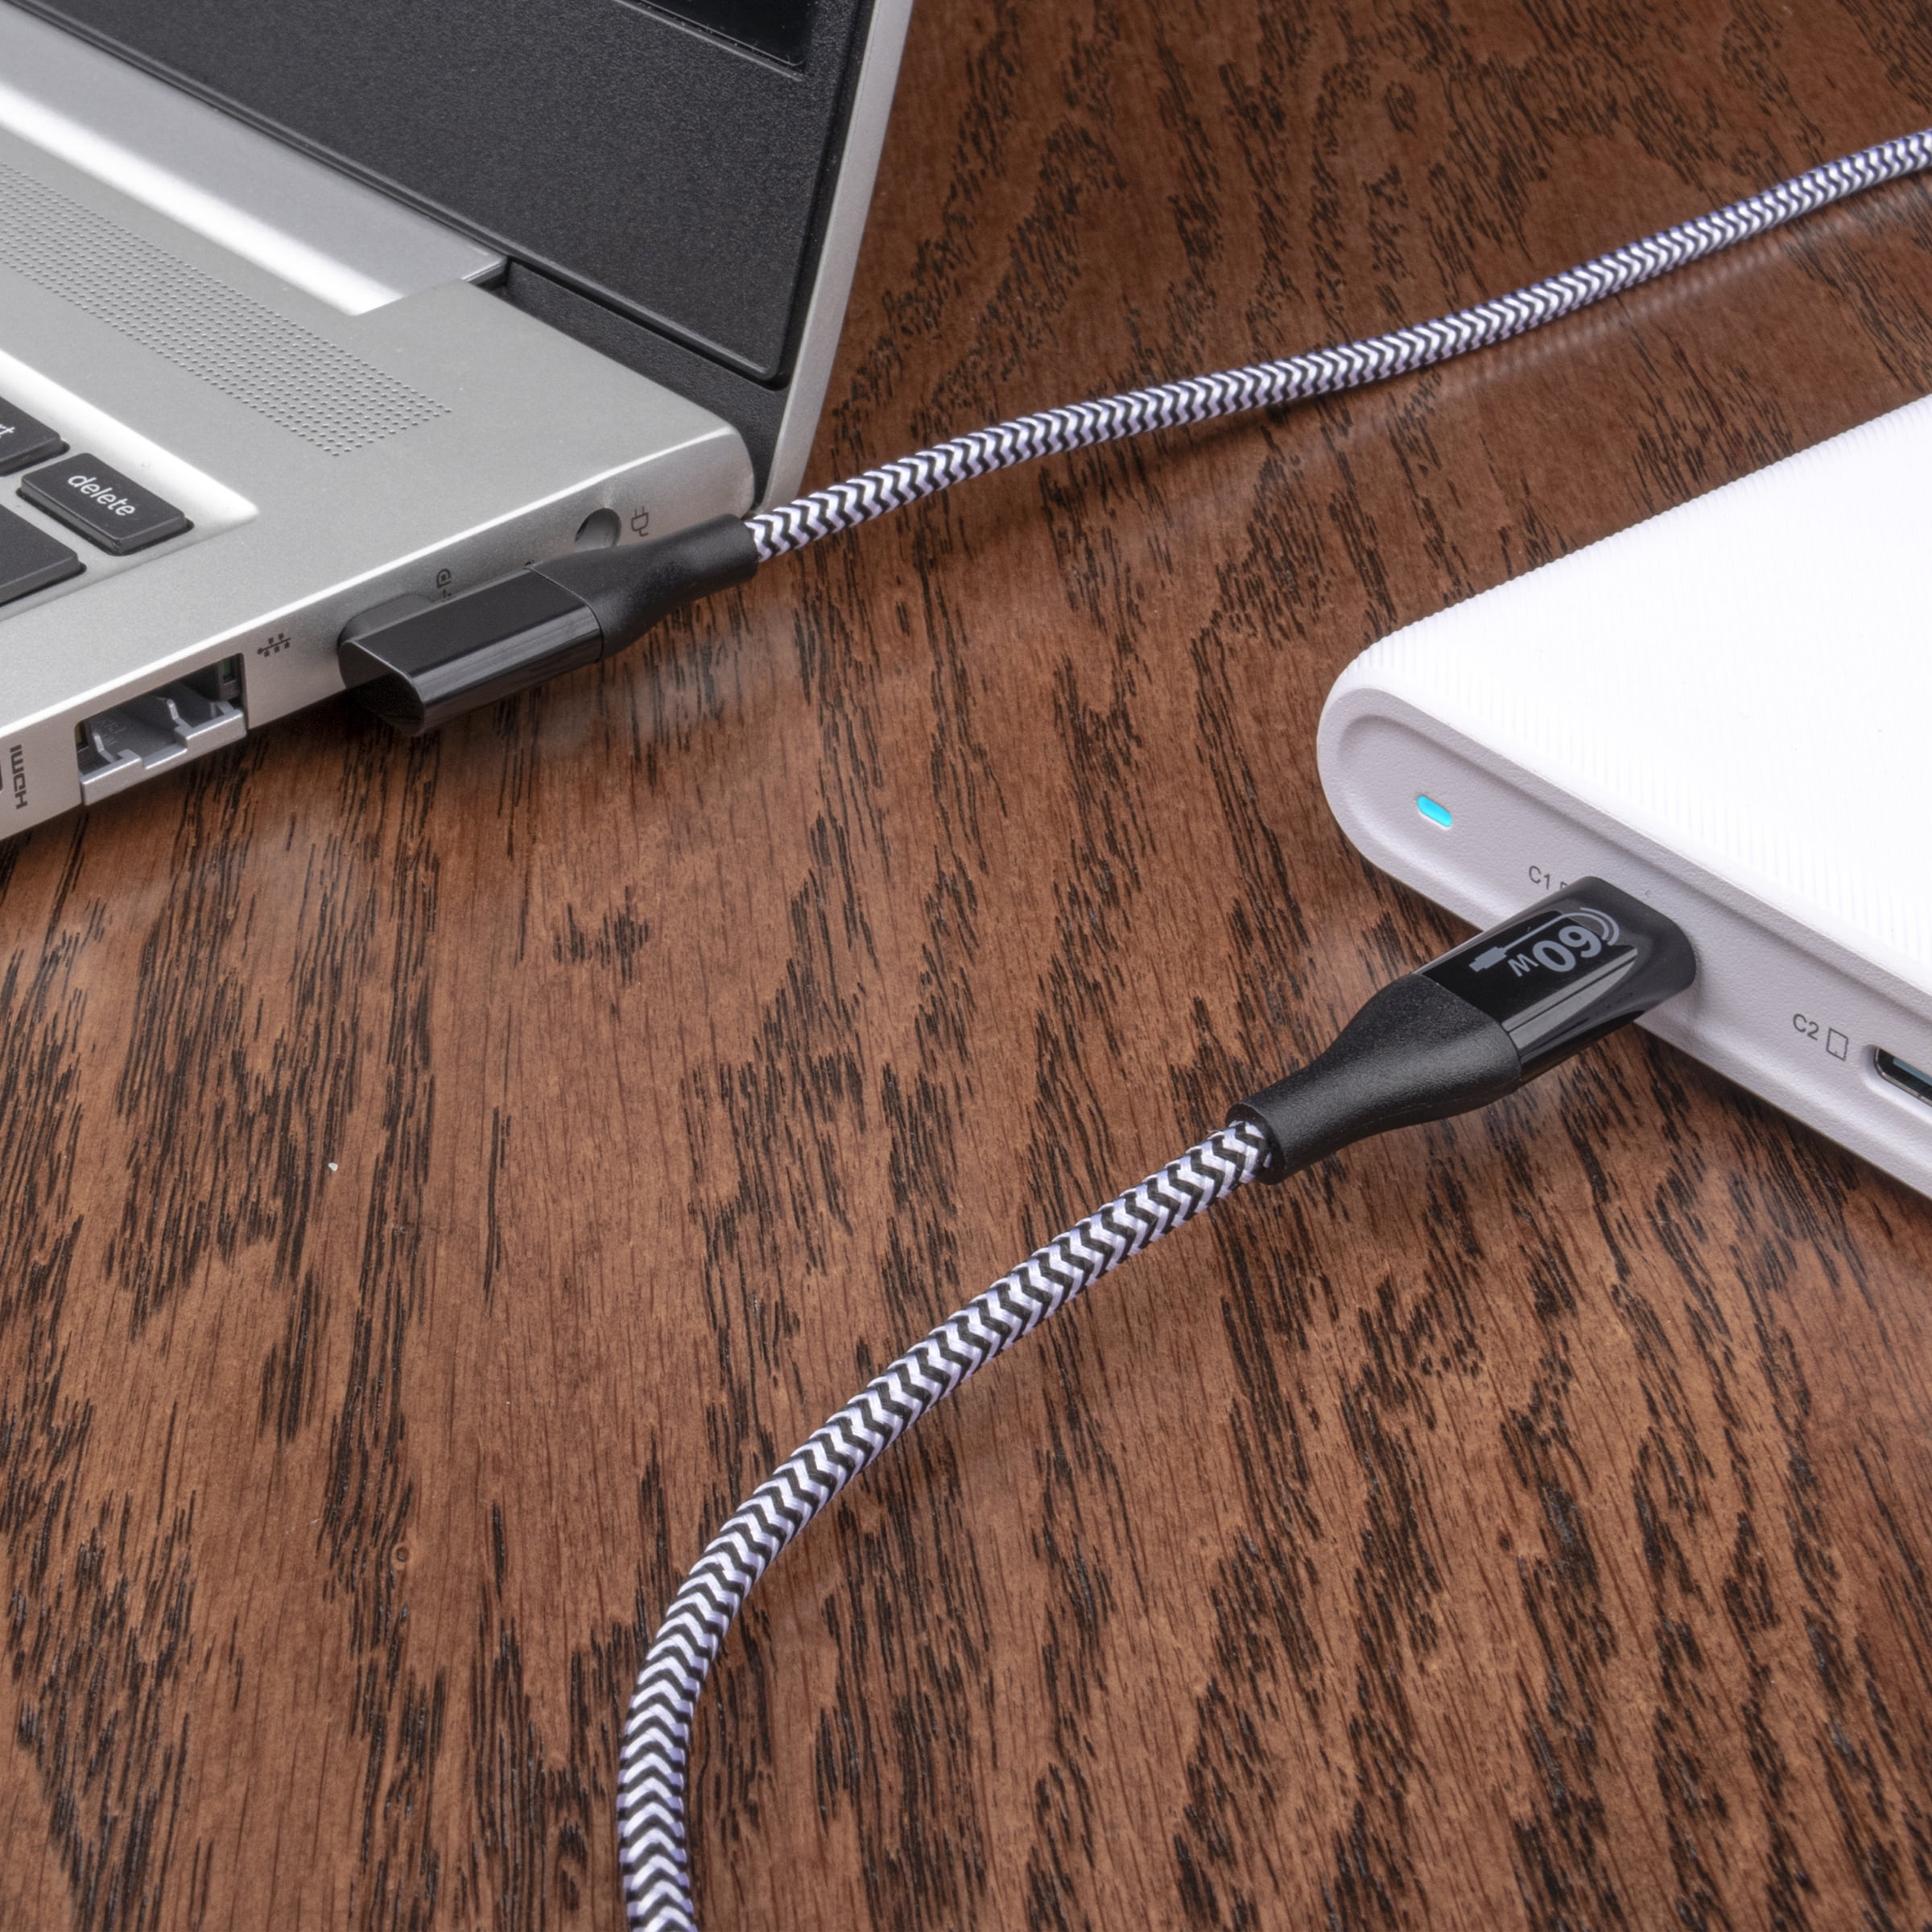 Câble USB Type C charge rapide 60W 8,90 €